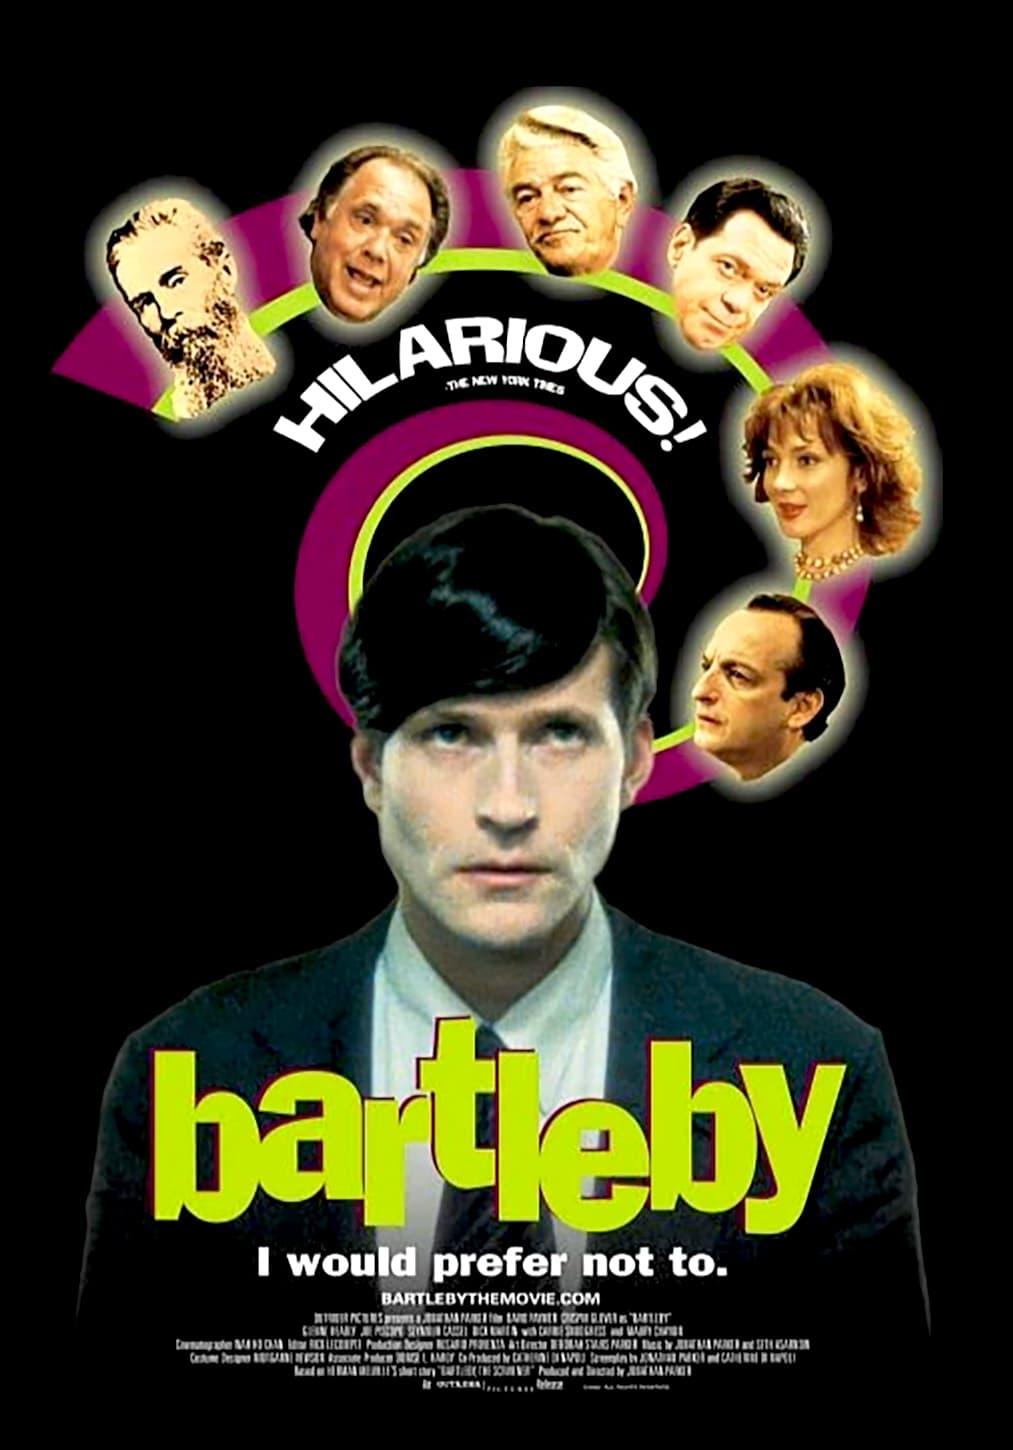 Bartleby poster